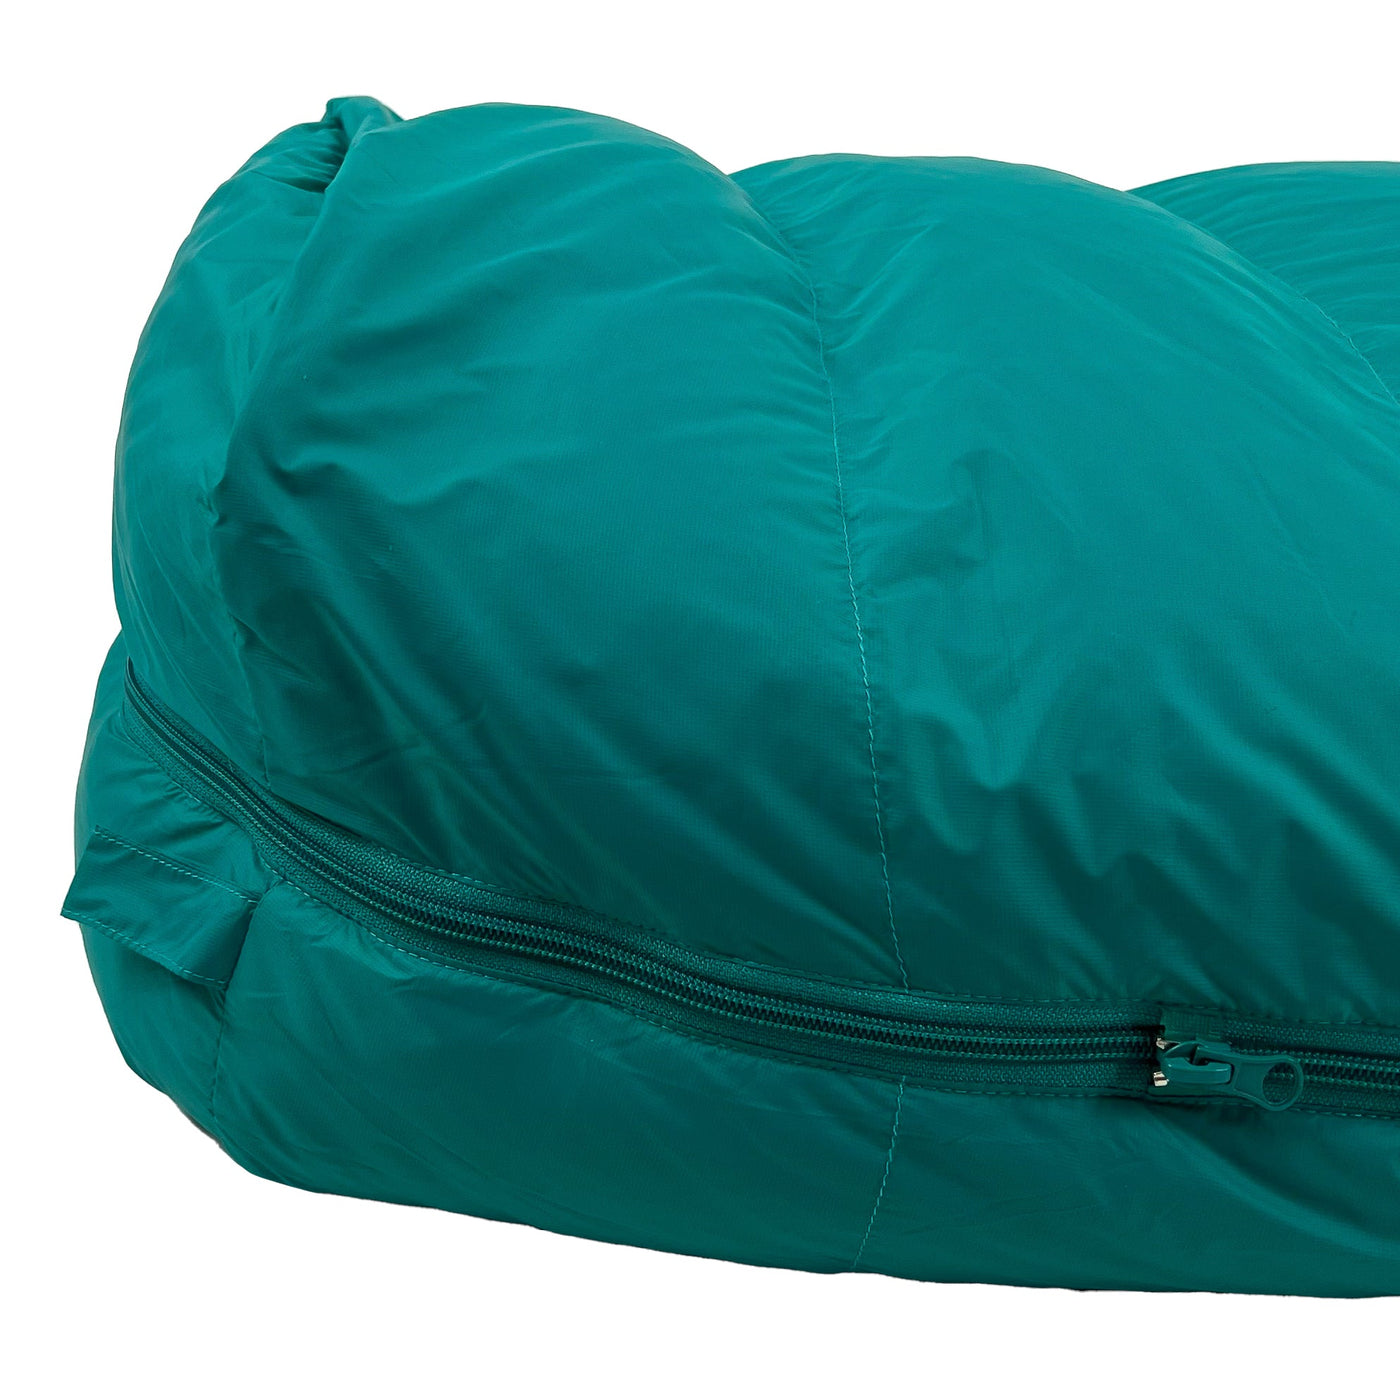 Hiker Extreme Sleeping Bag -13